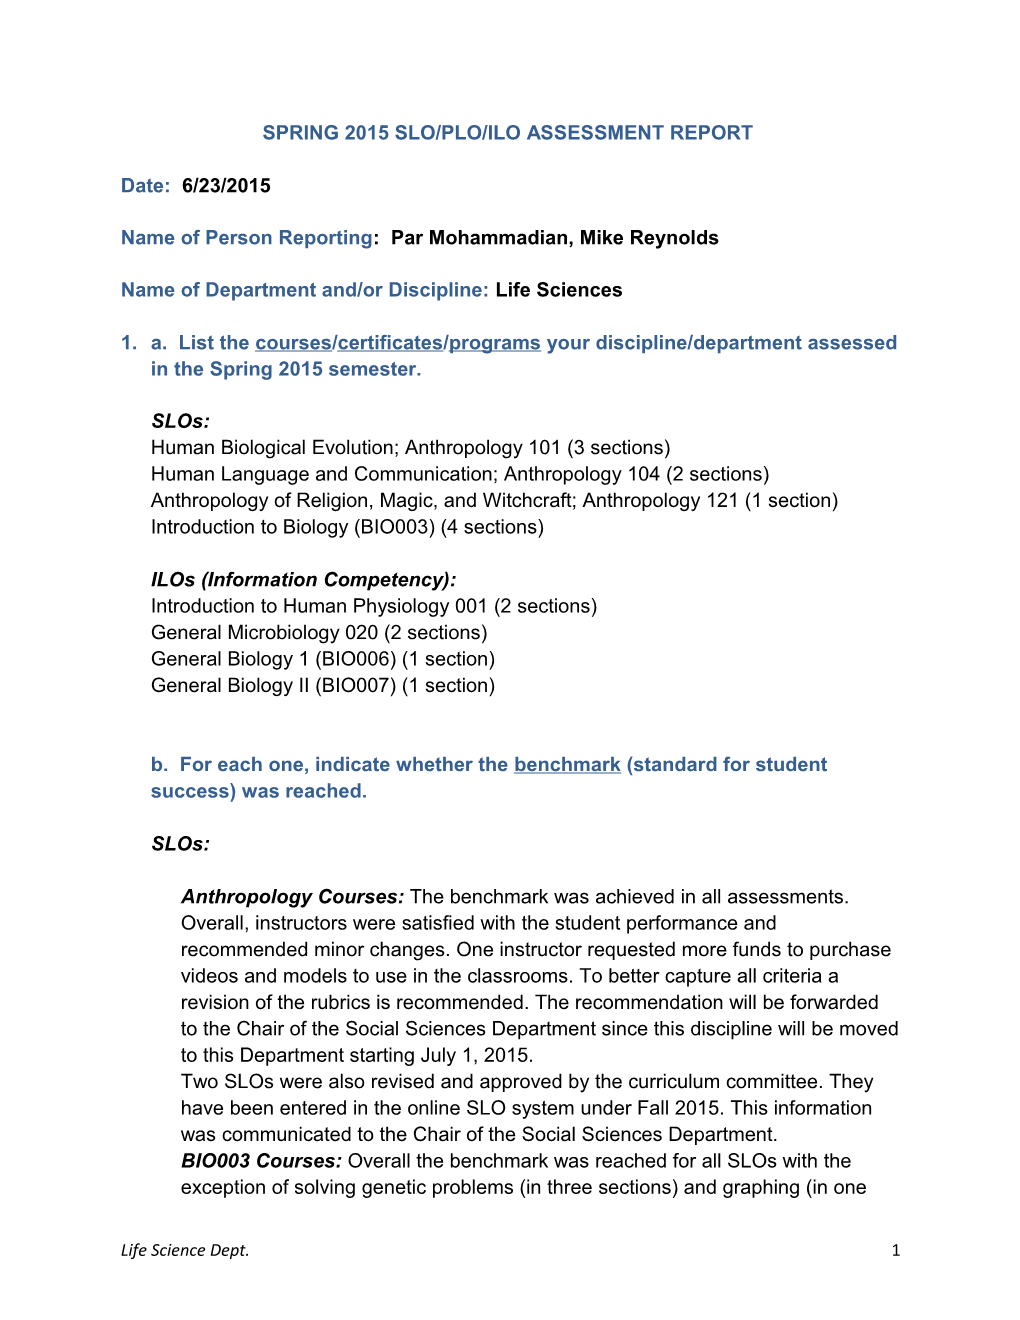 Spring 2015 Slo/Plo/Ilo Assessment Report